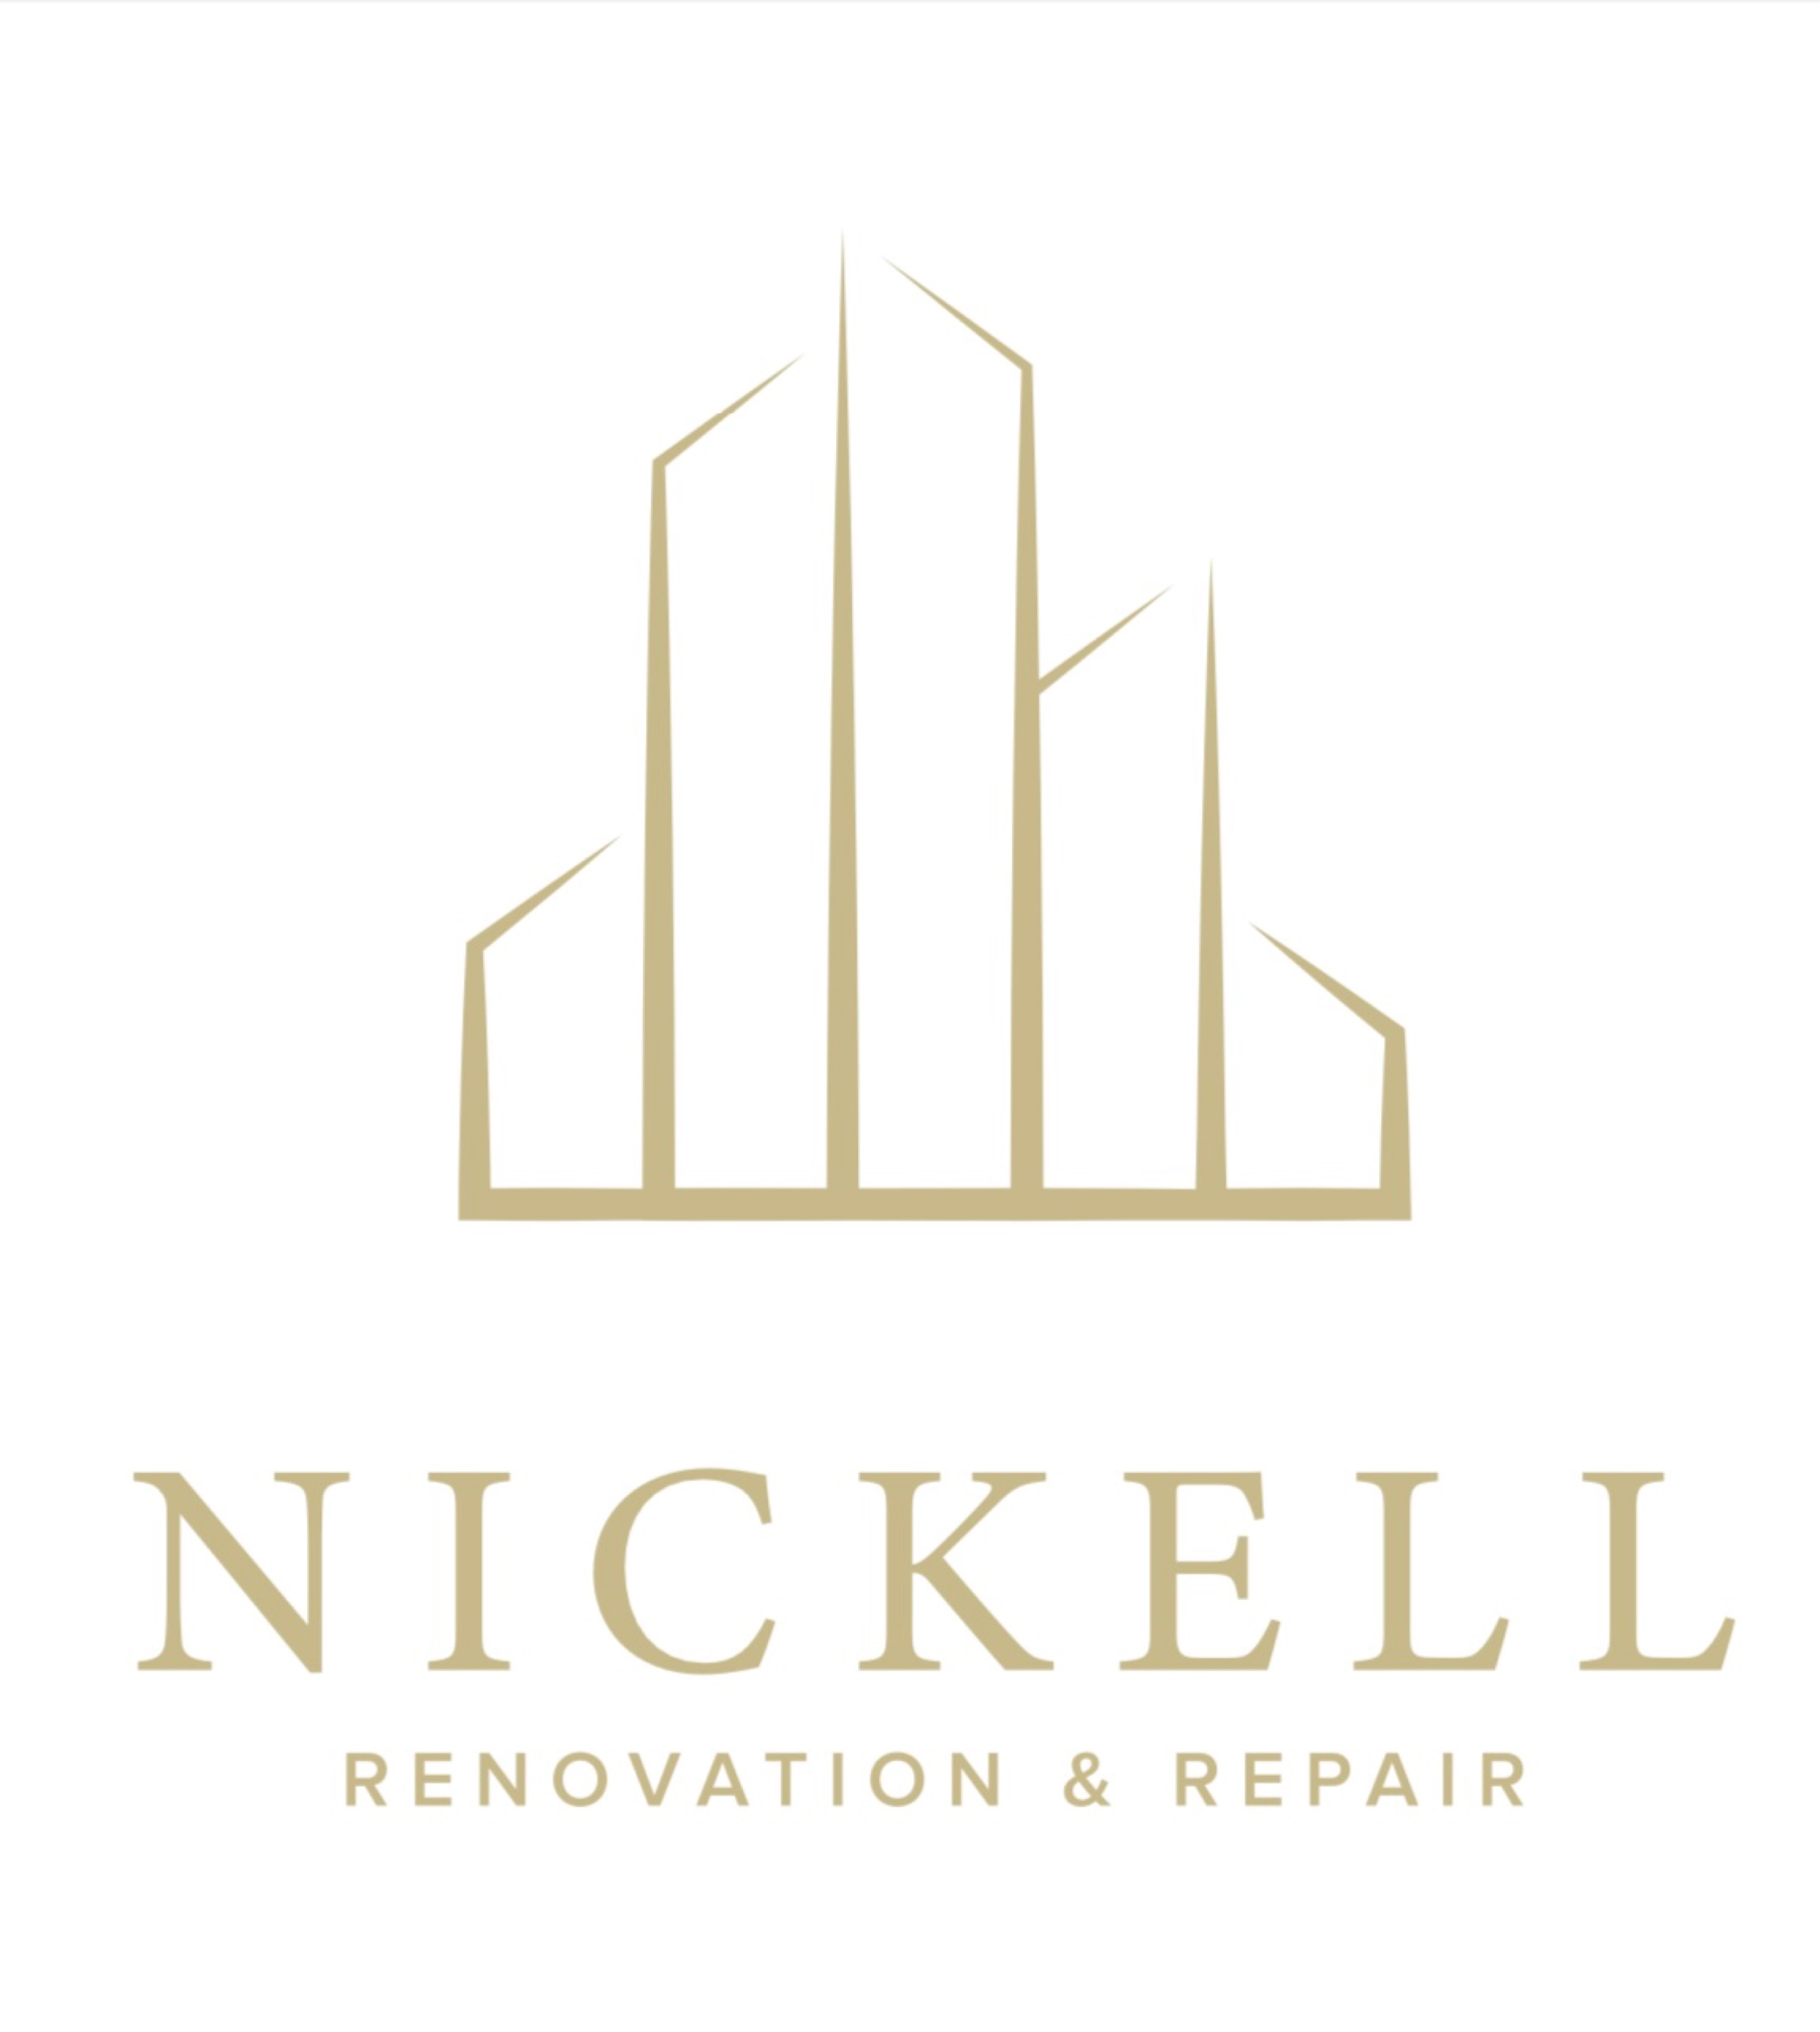 Nickell Renovation & Repair Logo